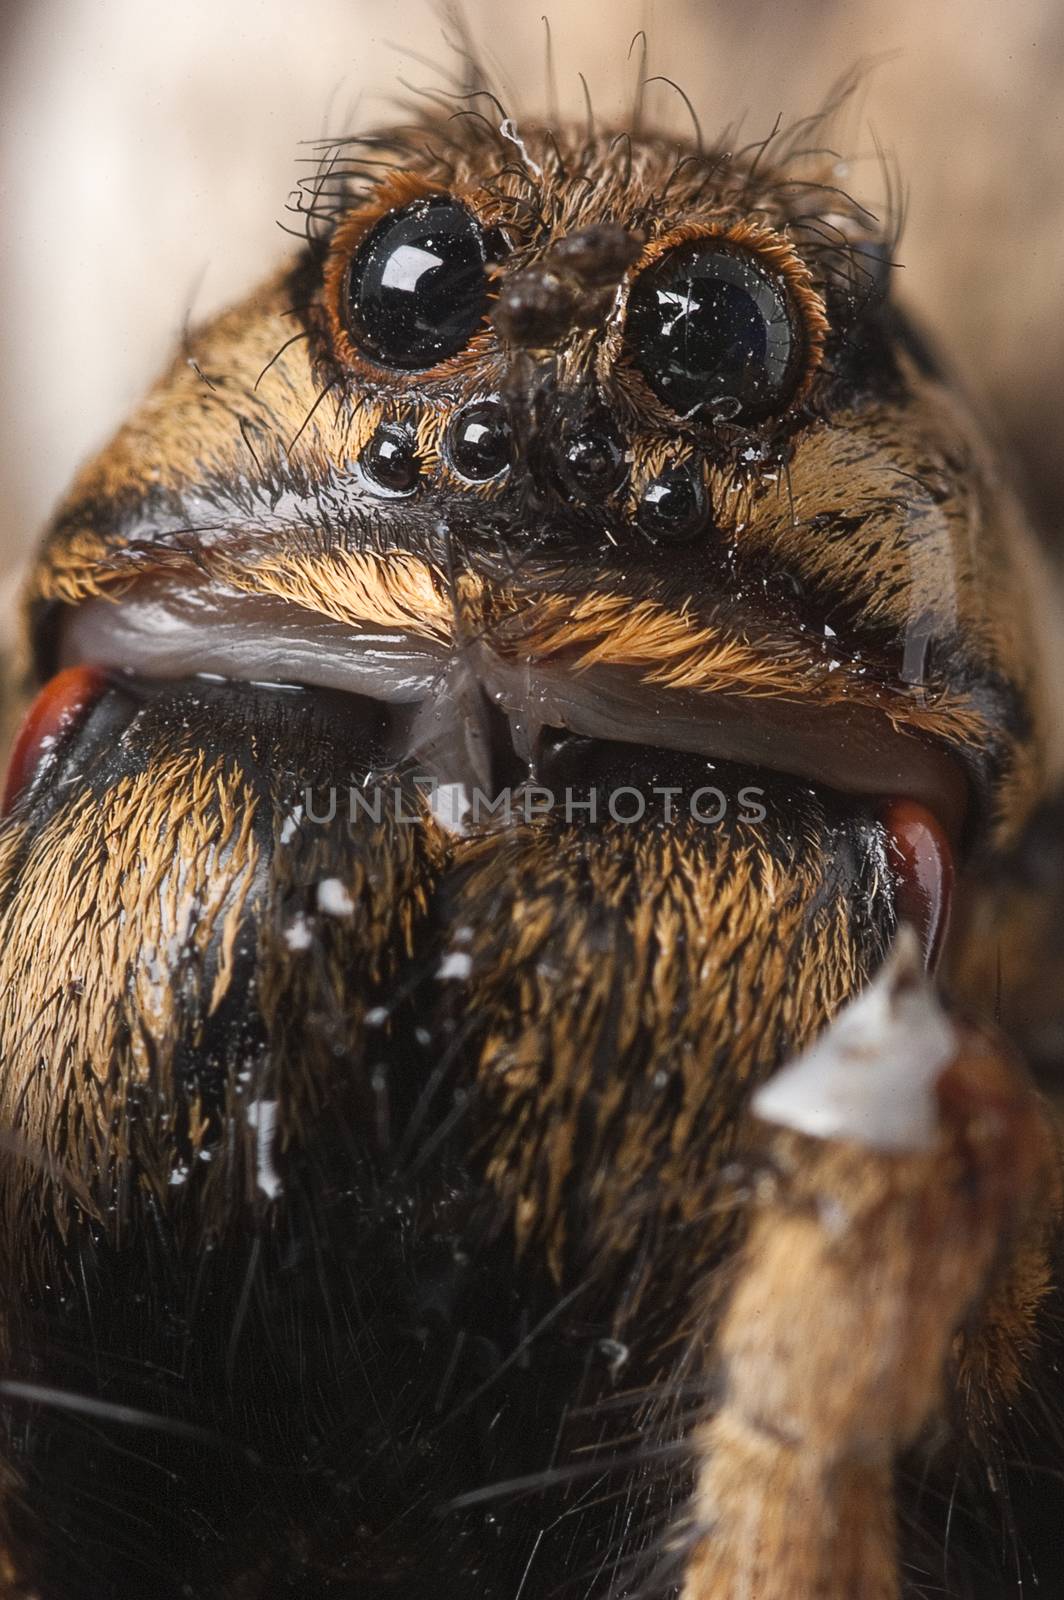 Closeup wolf spider species,Lycosa tarantula by jalonsohu@gmail.com